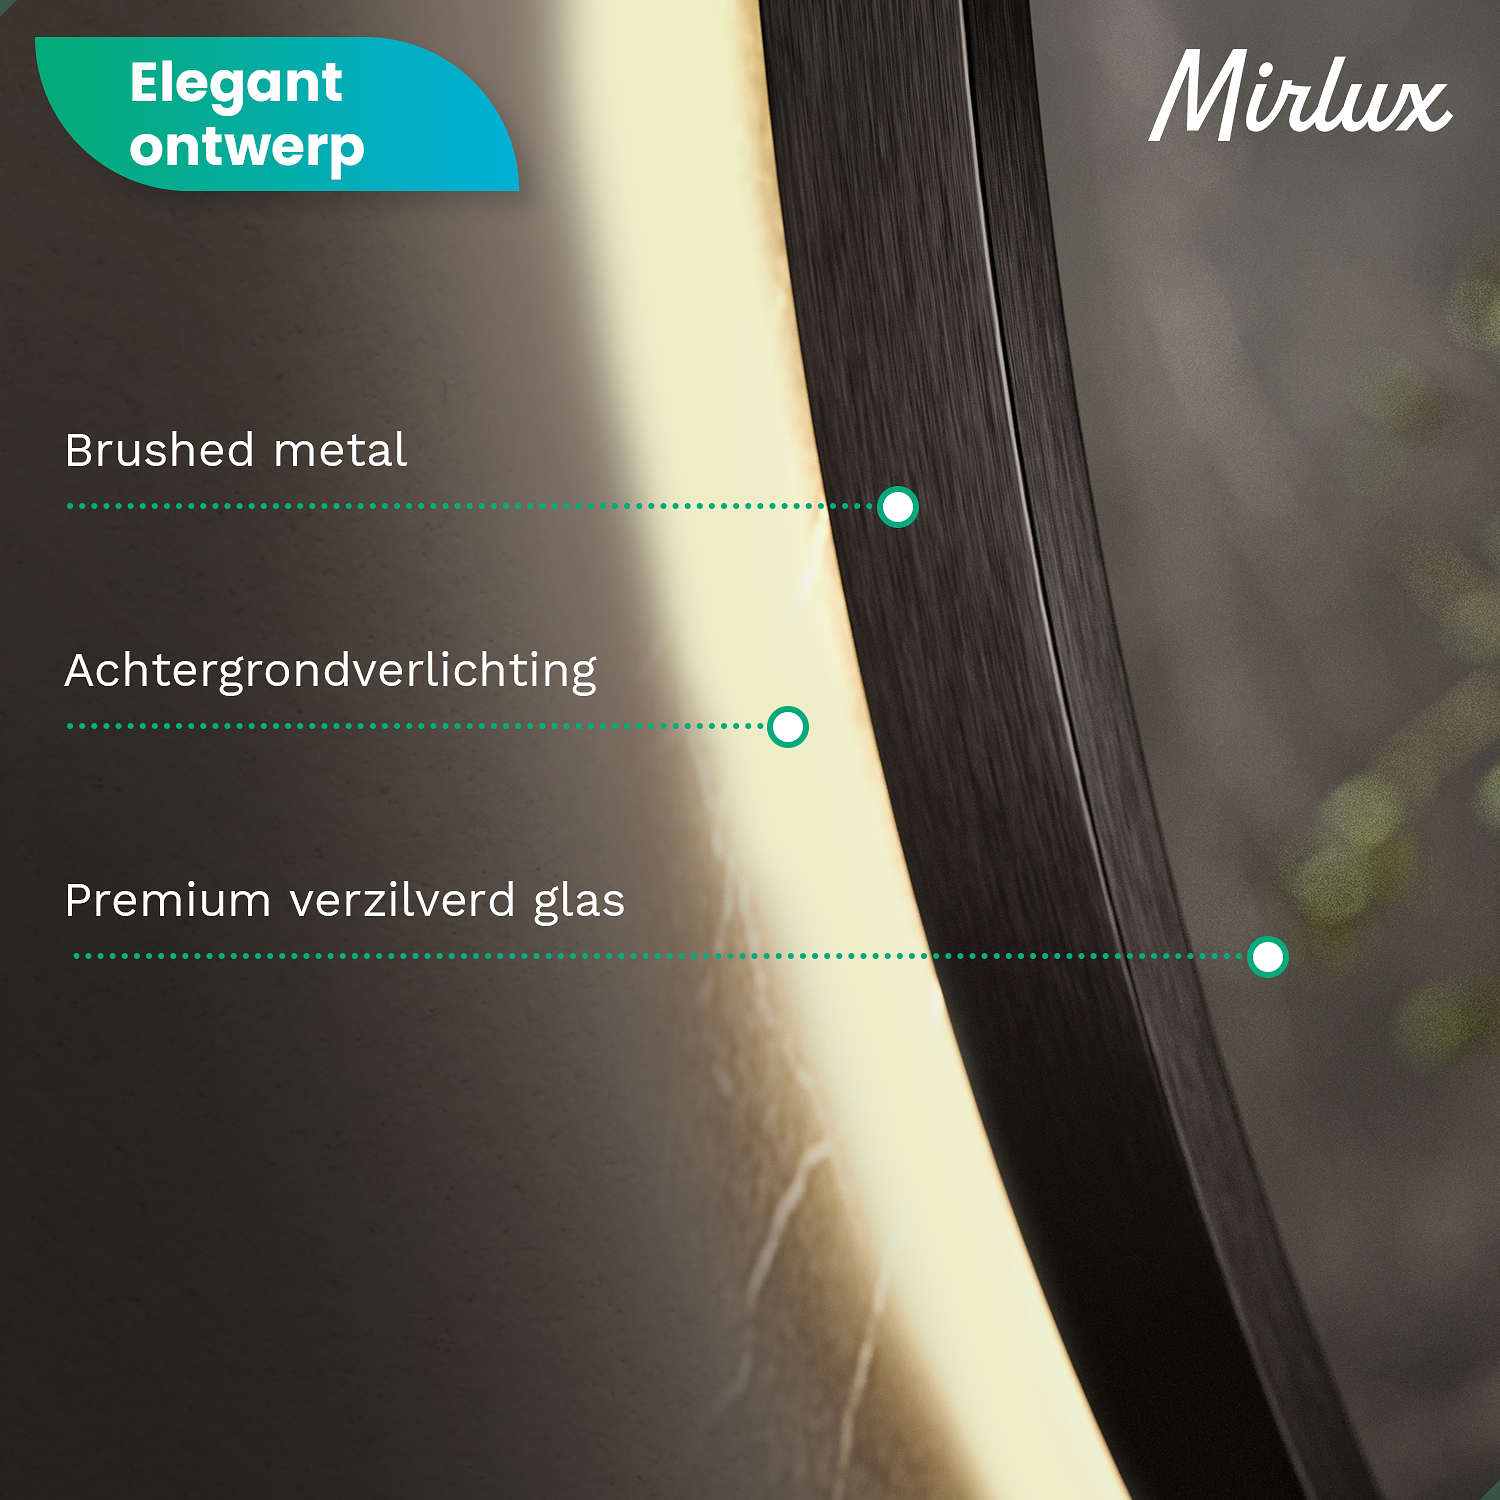 Mirlux Bathroom Mirror with LED Lighting - Round Wall Mirror - No condensation - Matte Black